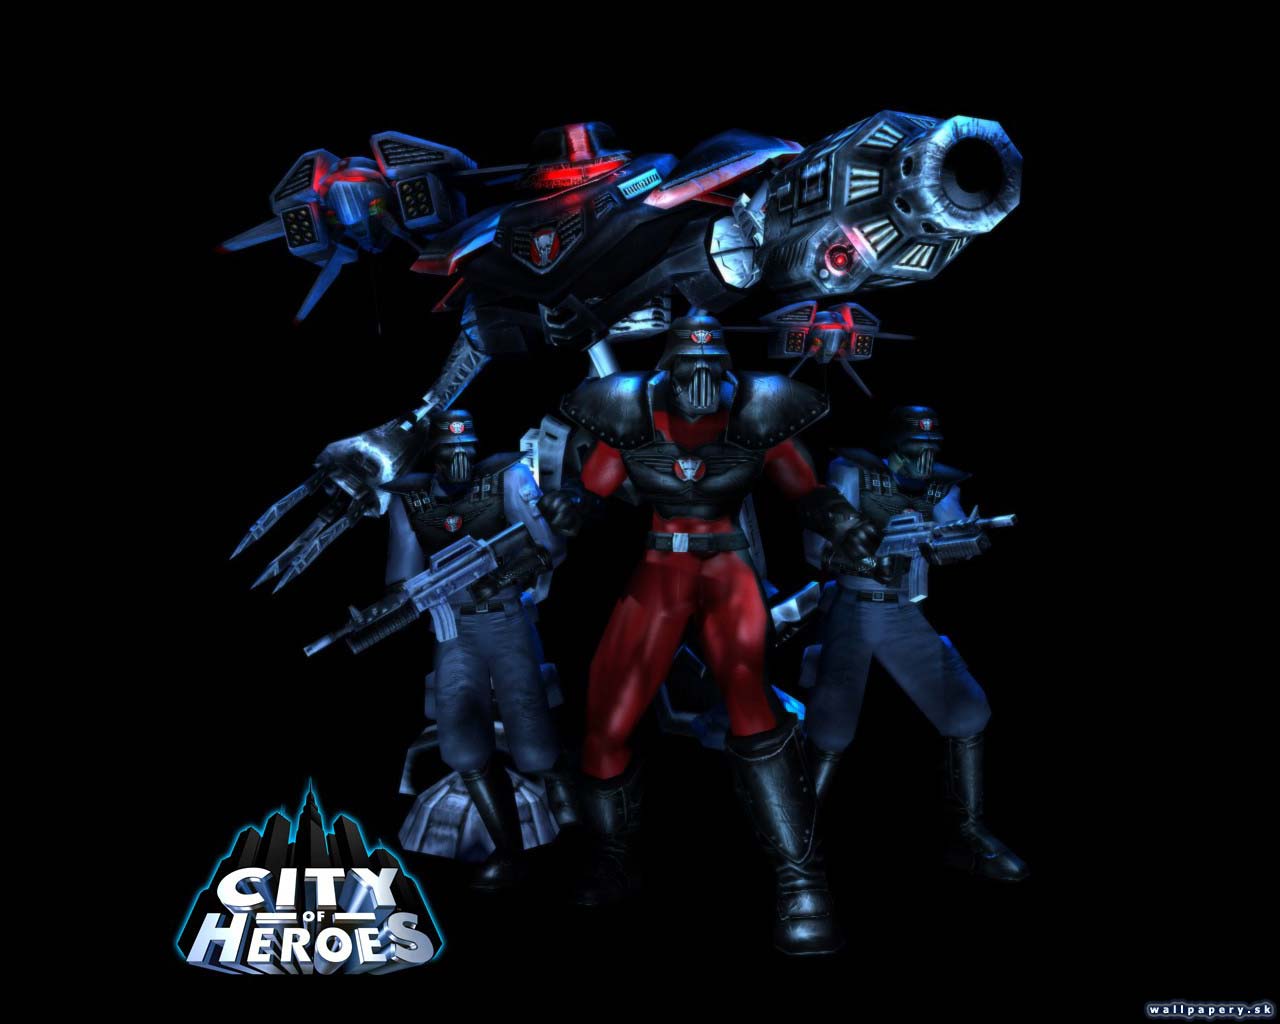 City of Heroes - wallpaper 7